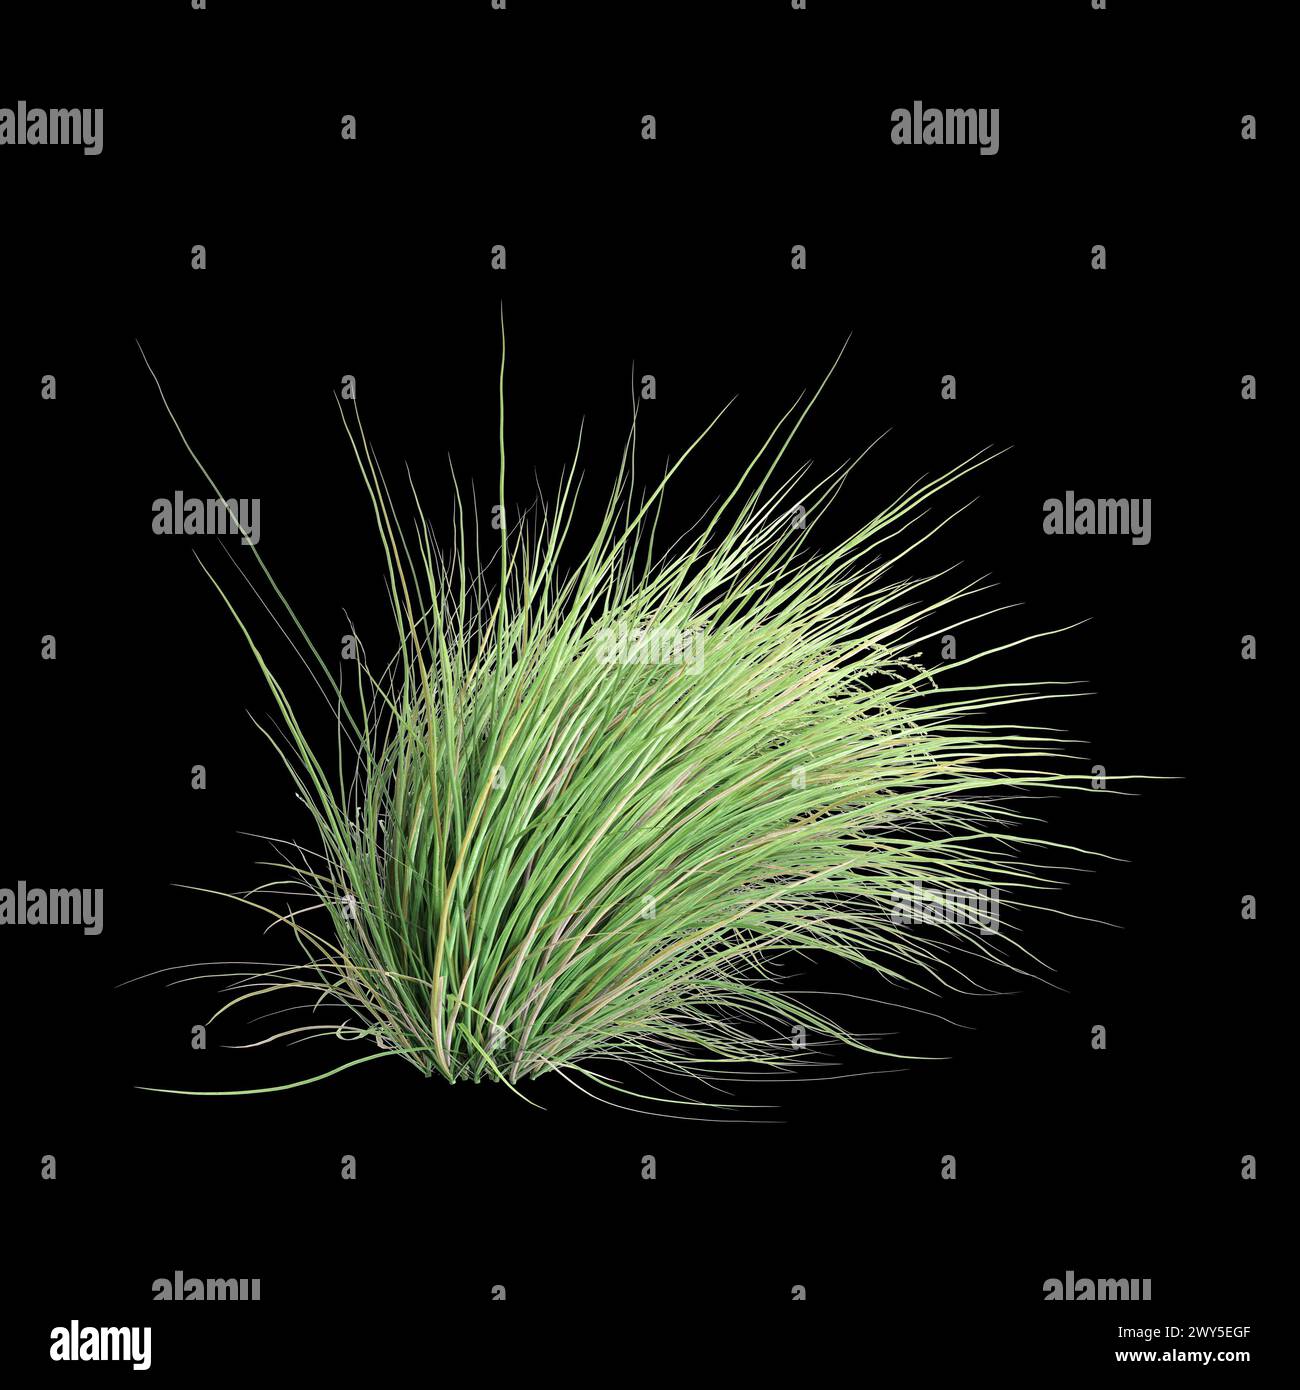 3d illustration of Poa labillardier bush isolated on black background Stock Photo